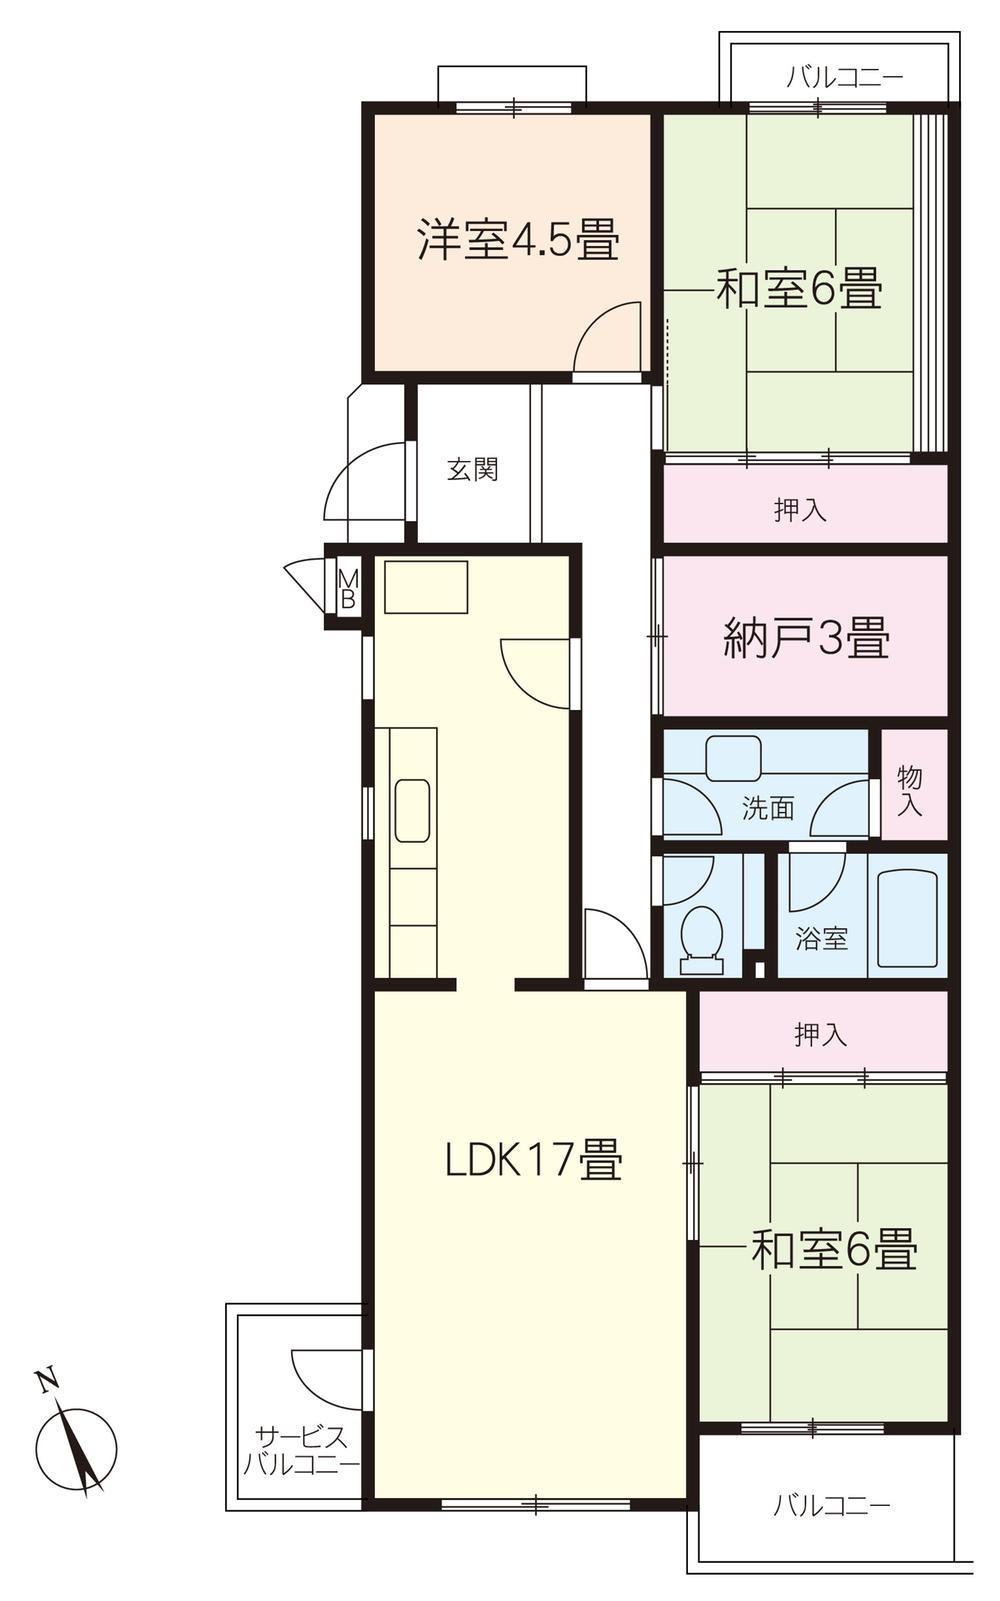 Floor plan. 3LDK + S (storeroom), Price 6.8 million yen, Occupied area 88.95 sq m , Balcony area 9.7 sq m